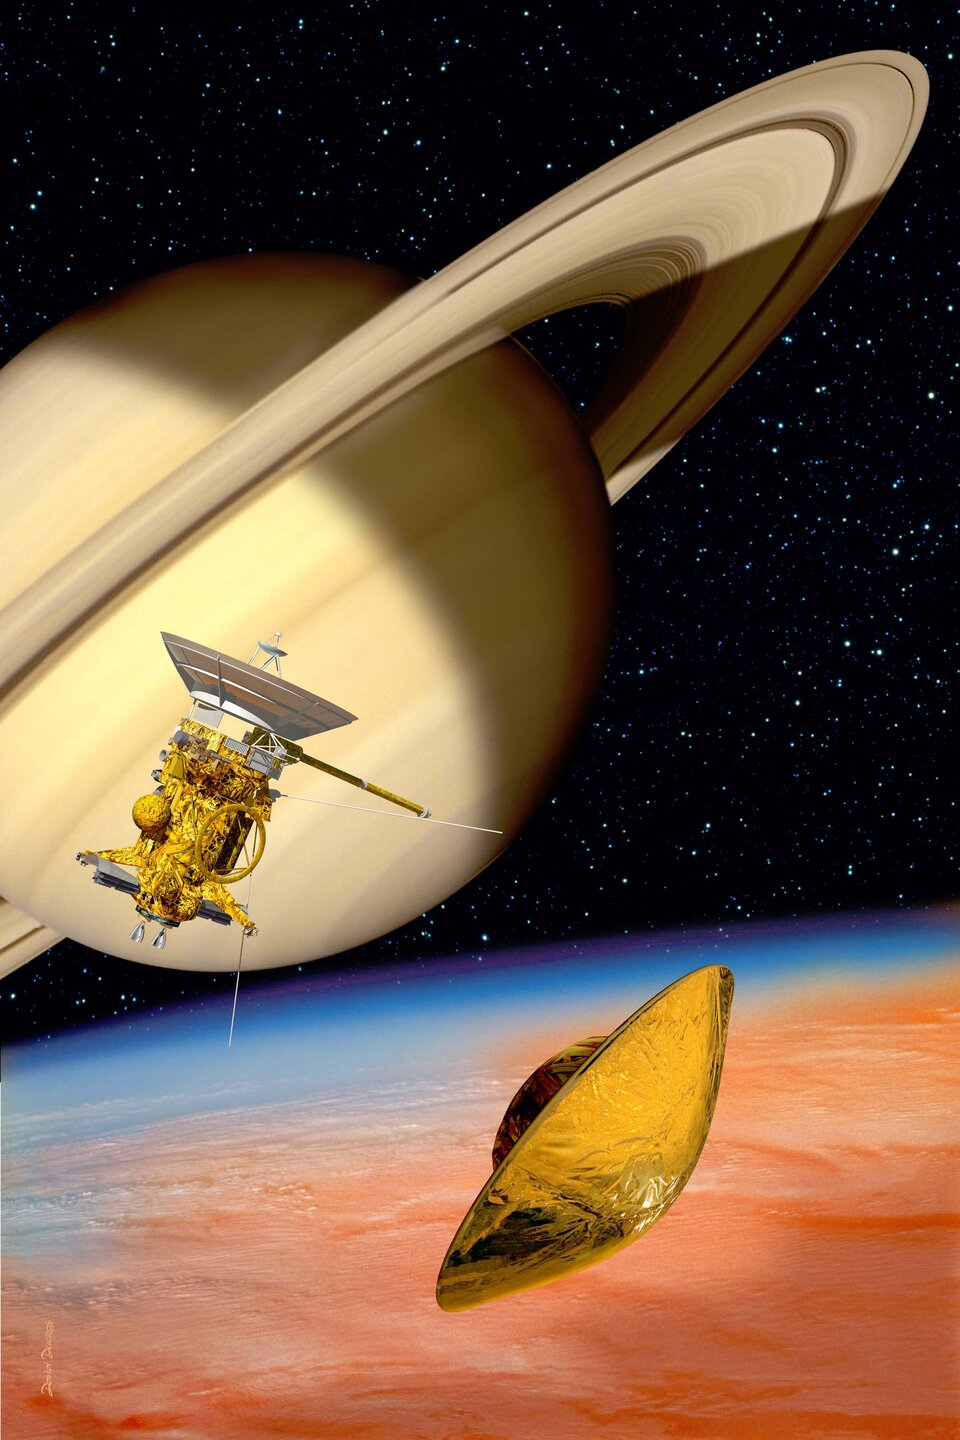 The Cassini-Huygens probe